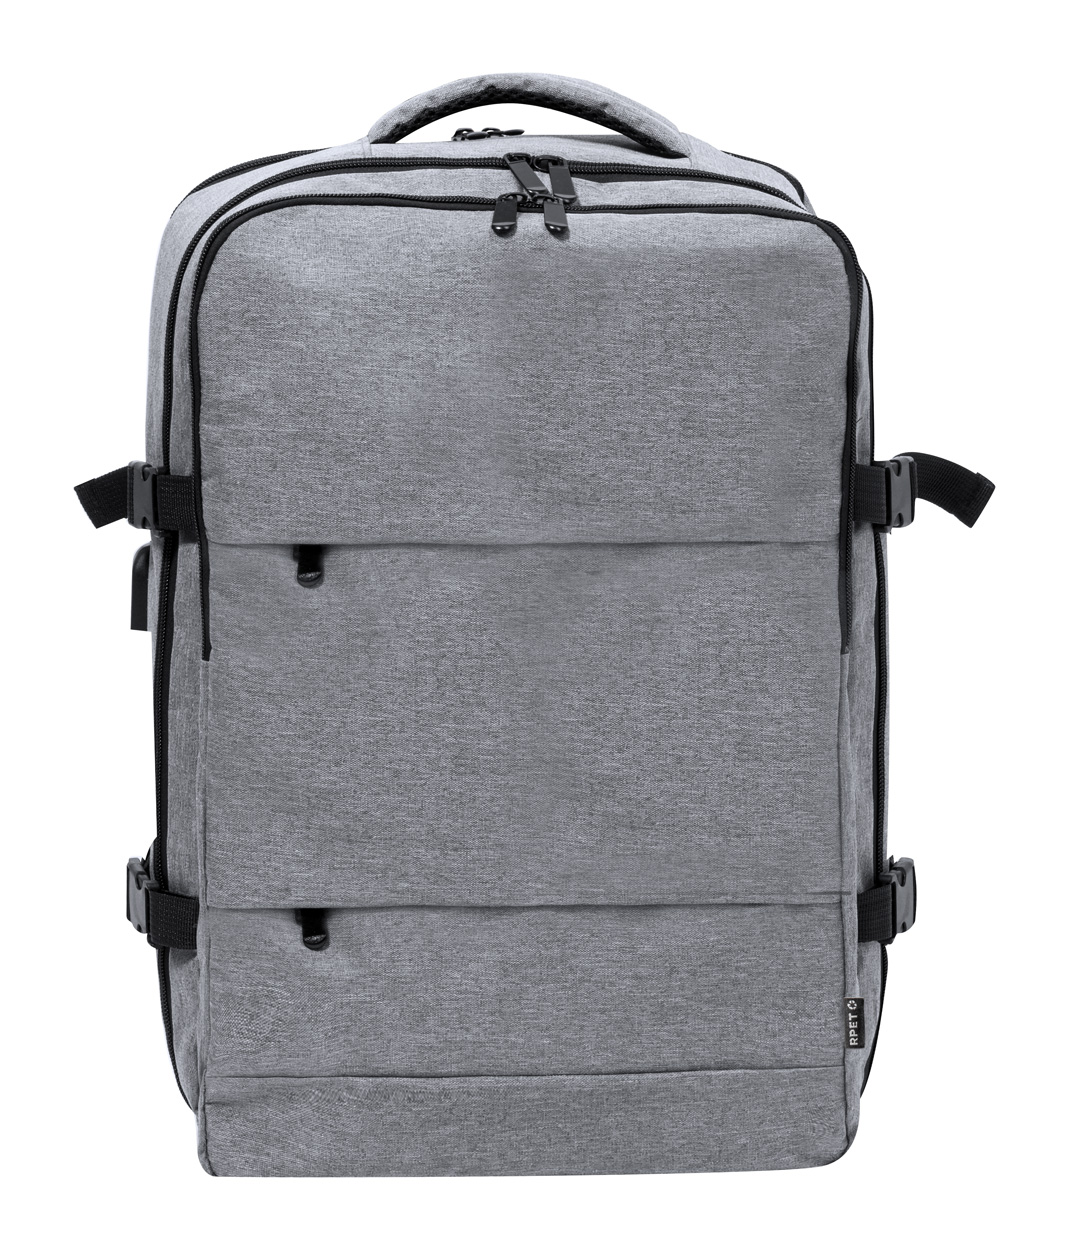 Myriax backpack - grey